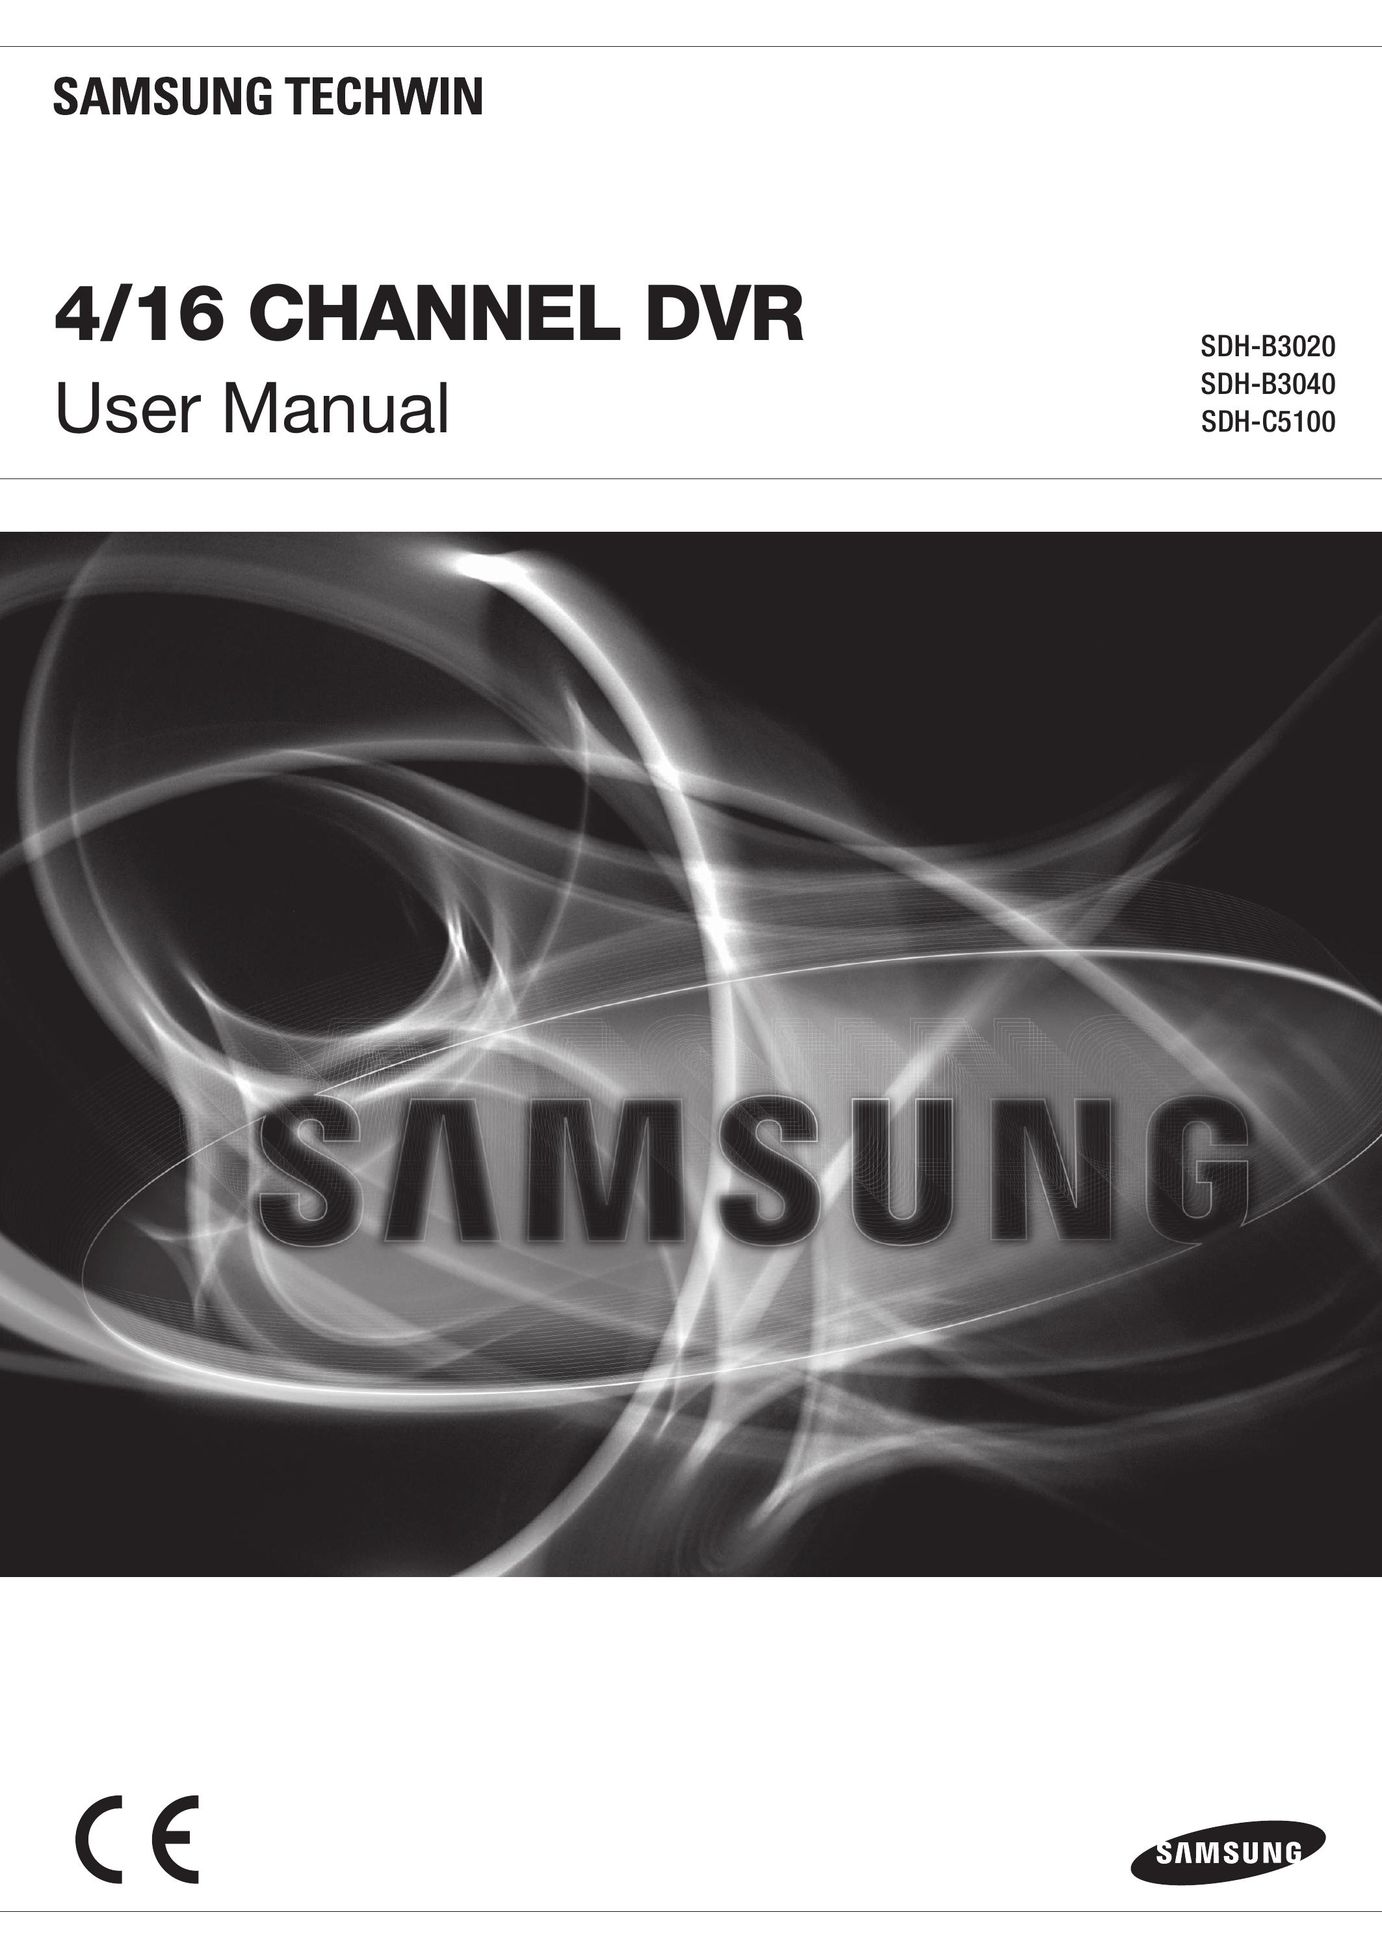 Samsung SDH-B3020 DVR User Manual